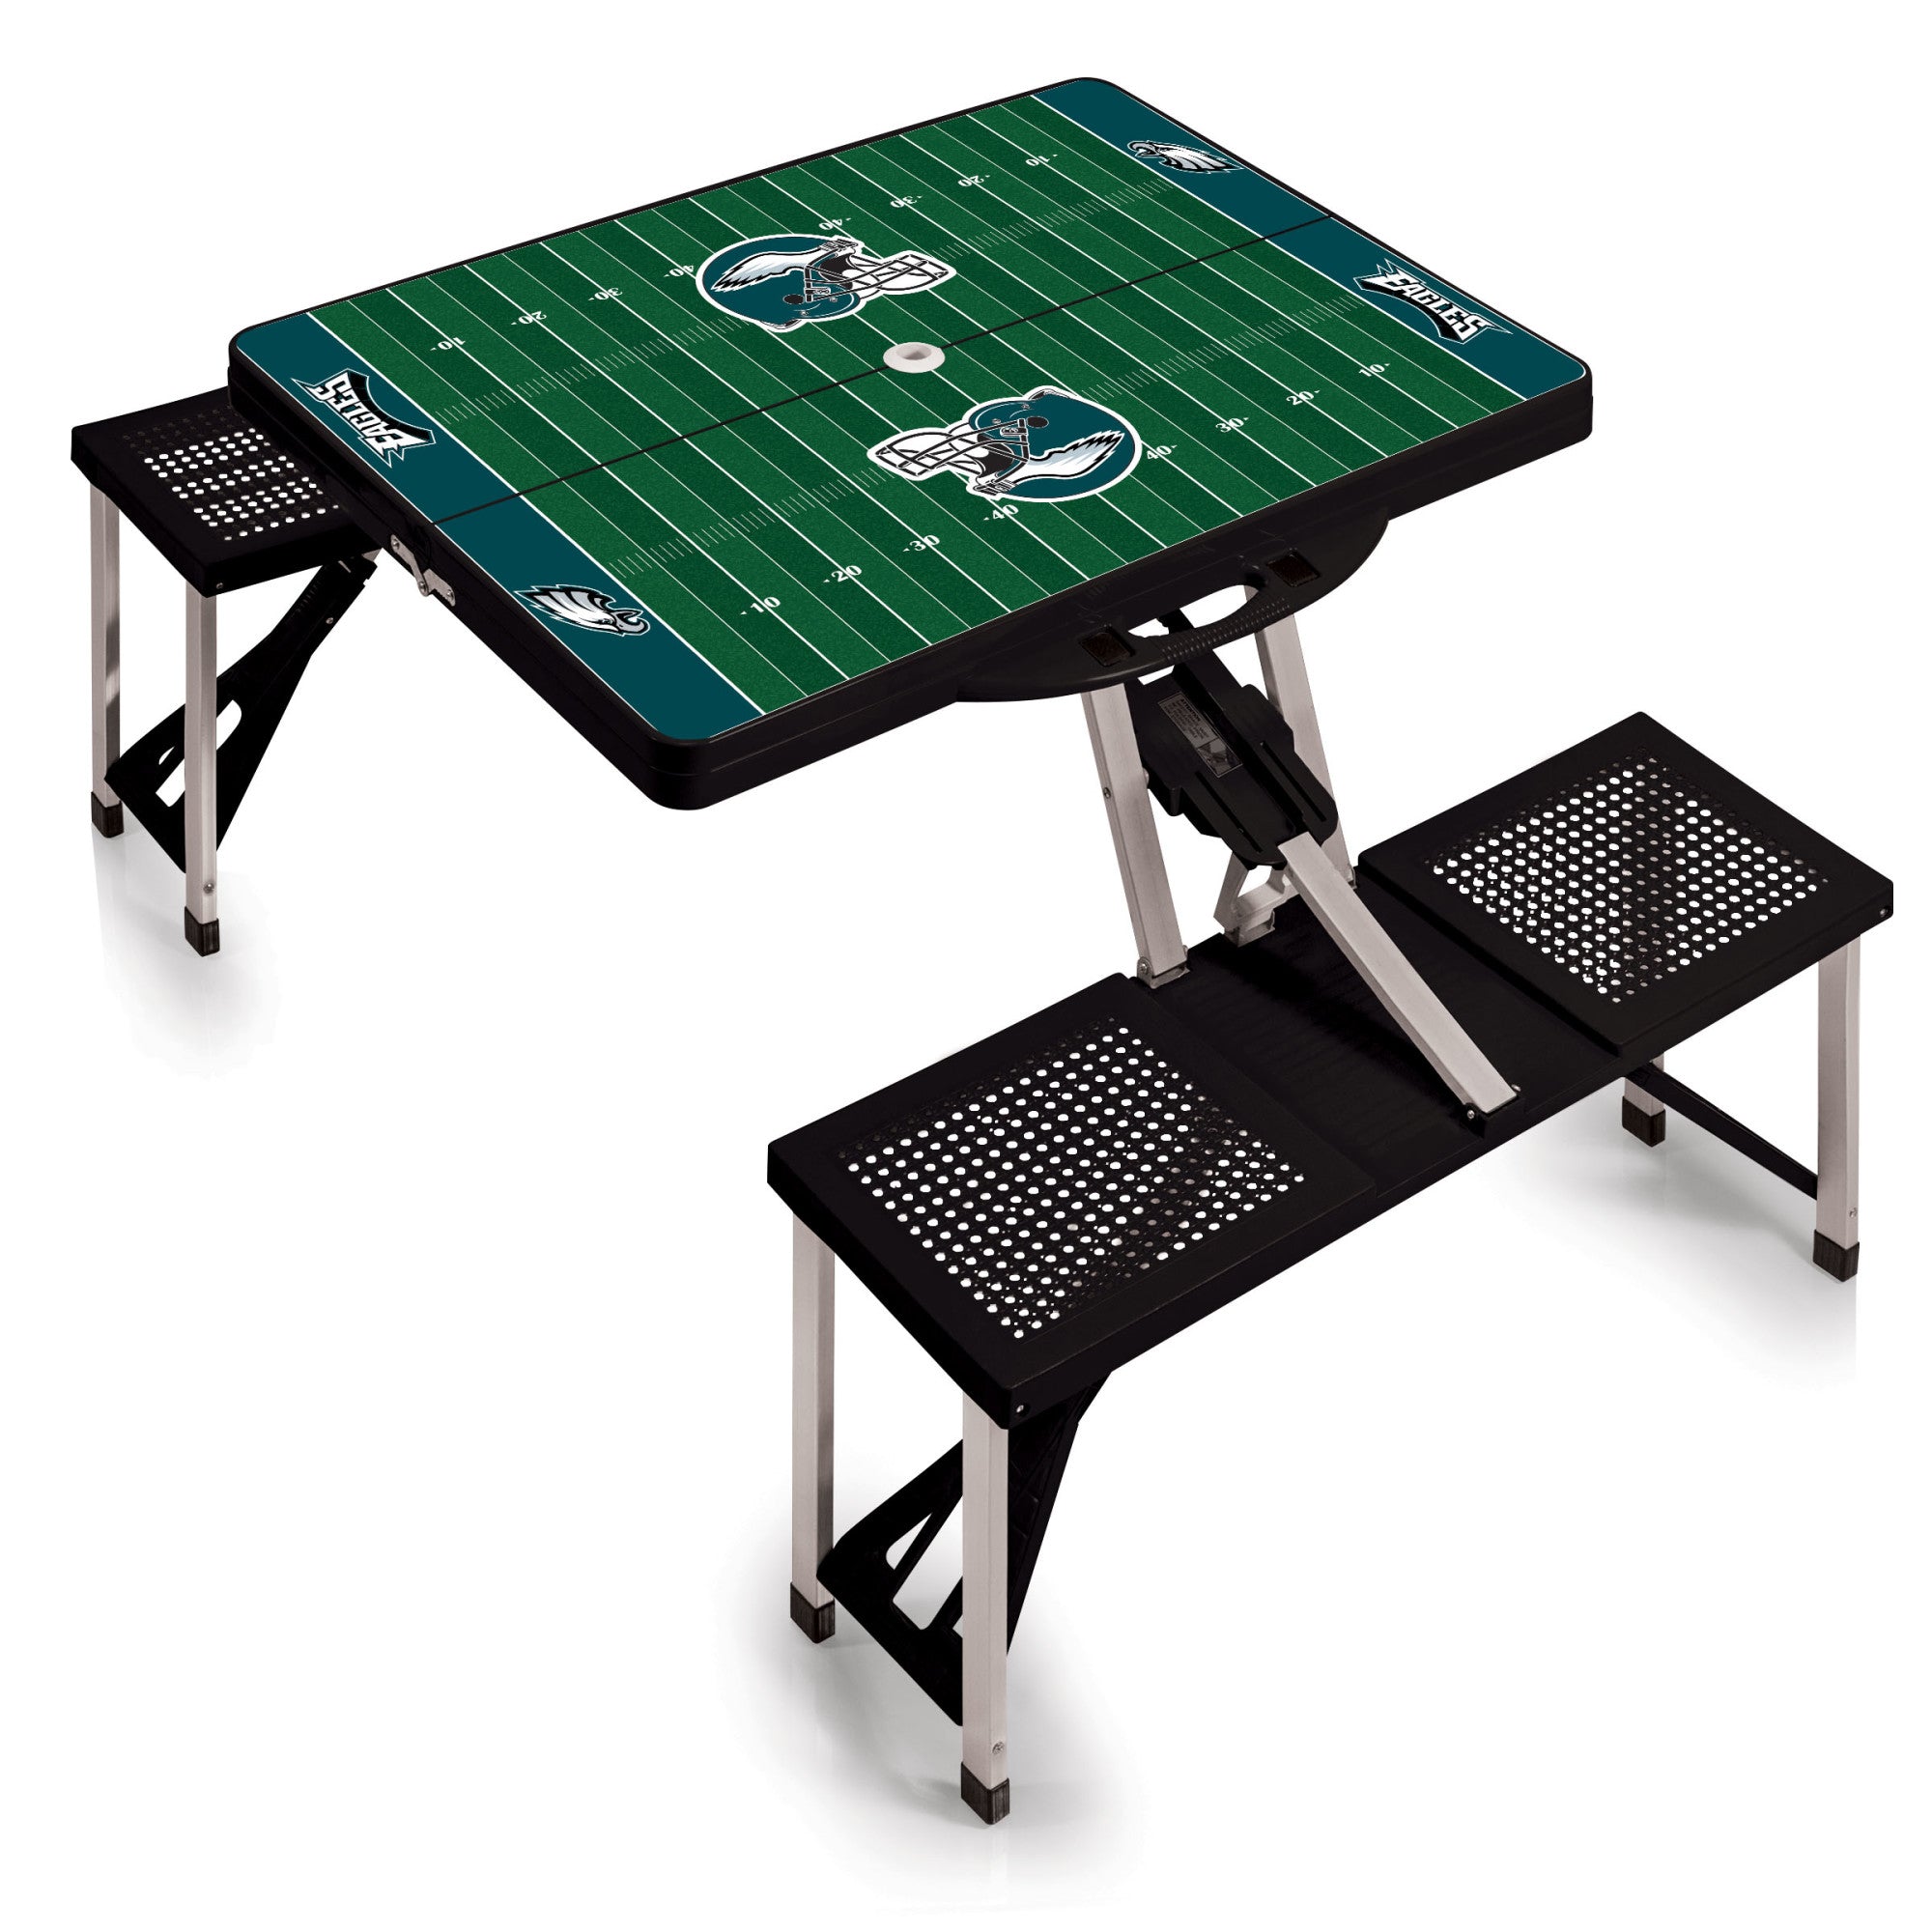 Philadelphia Eagles - Picnic Table Portable Folding Table with Seats and Umbrella